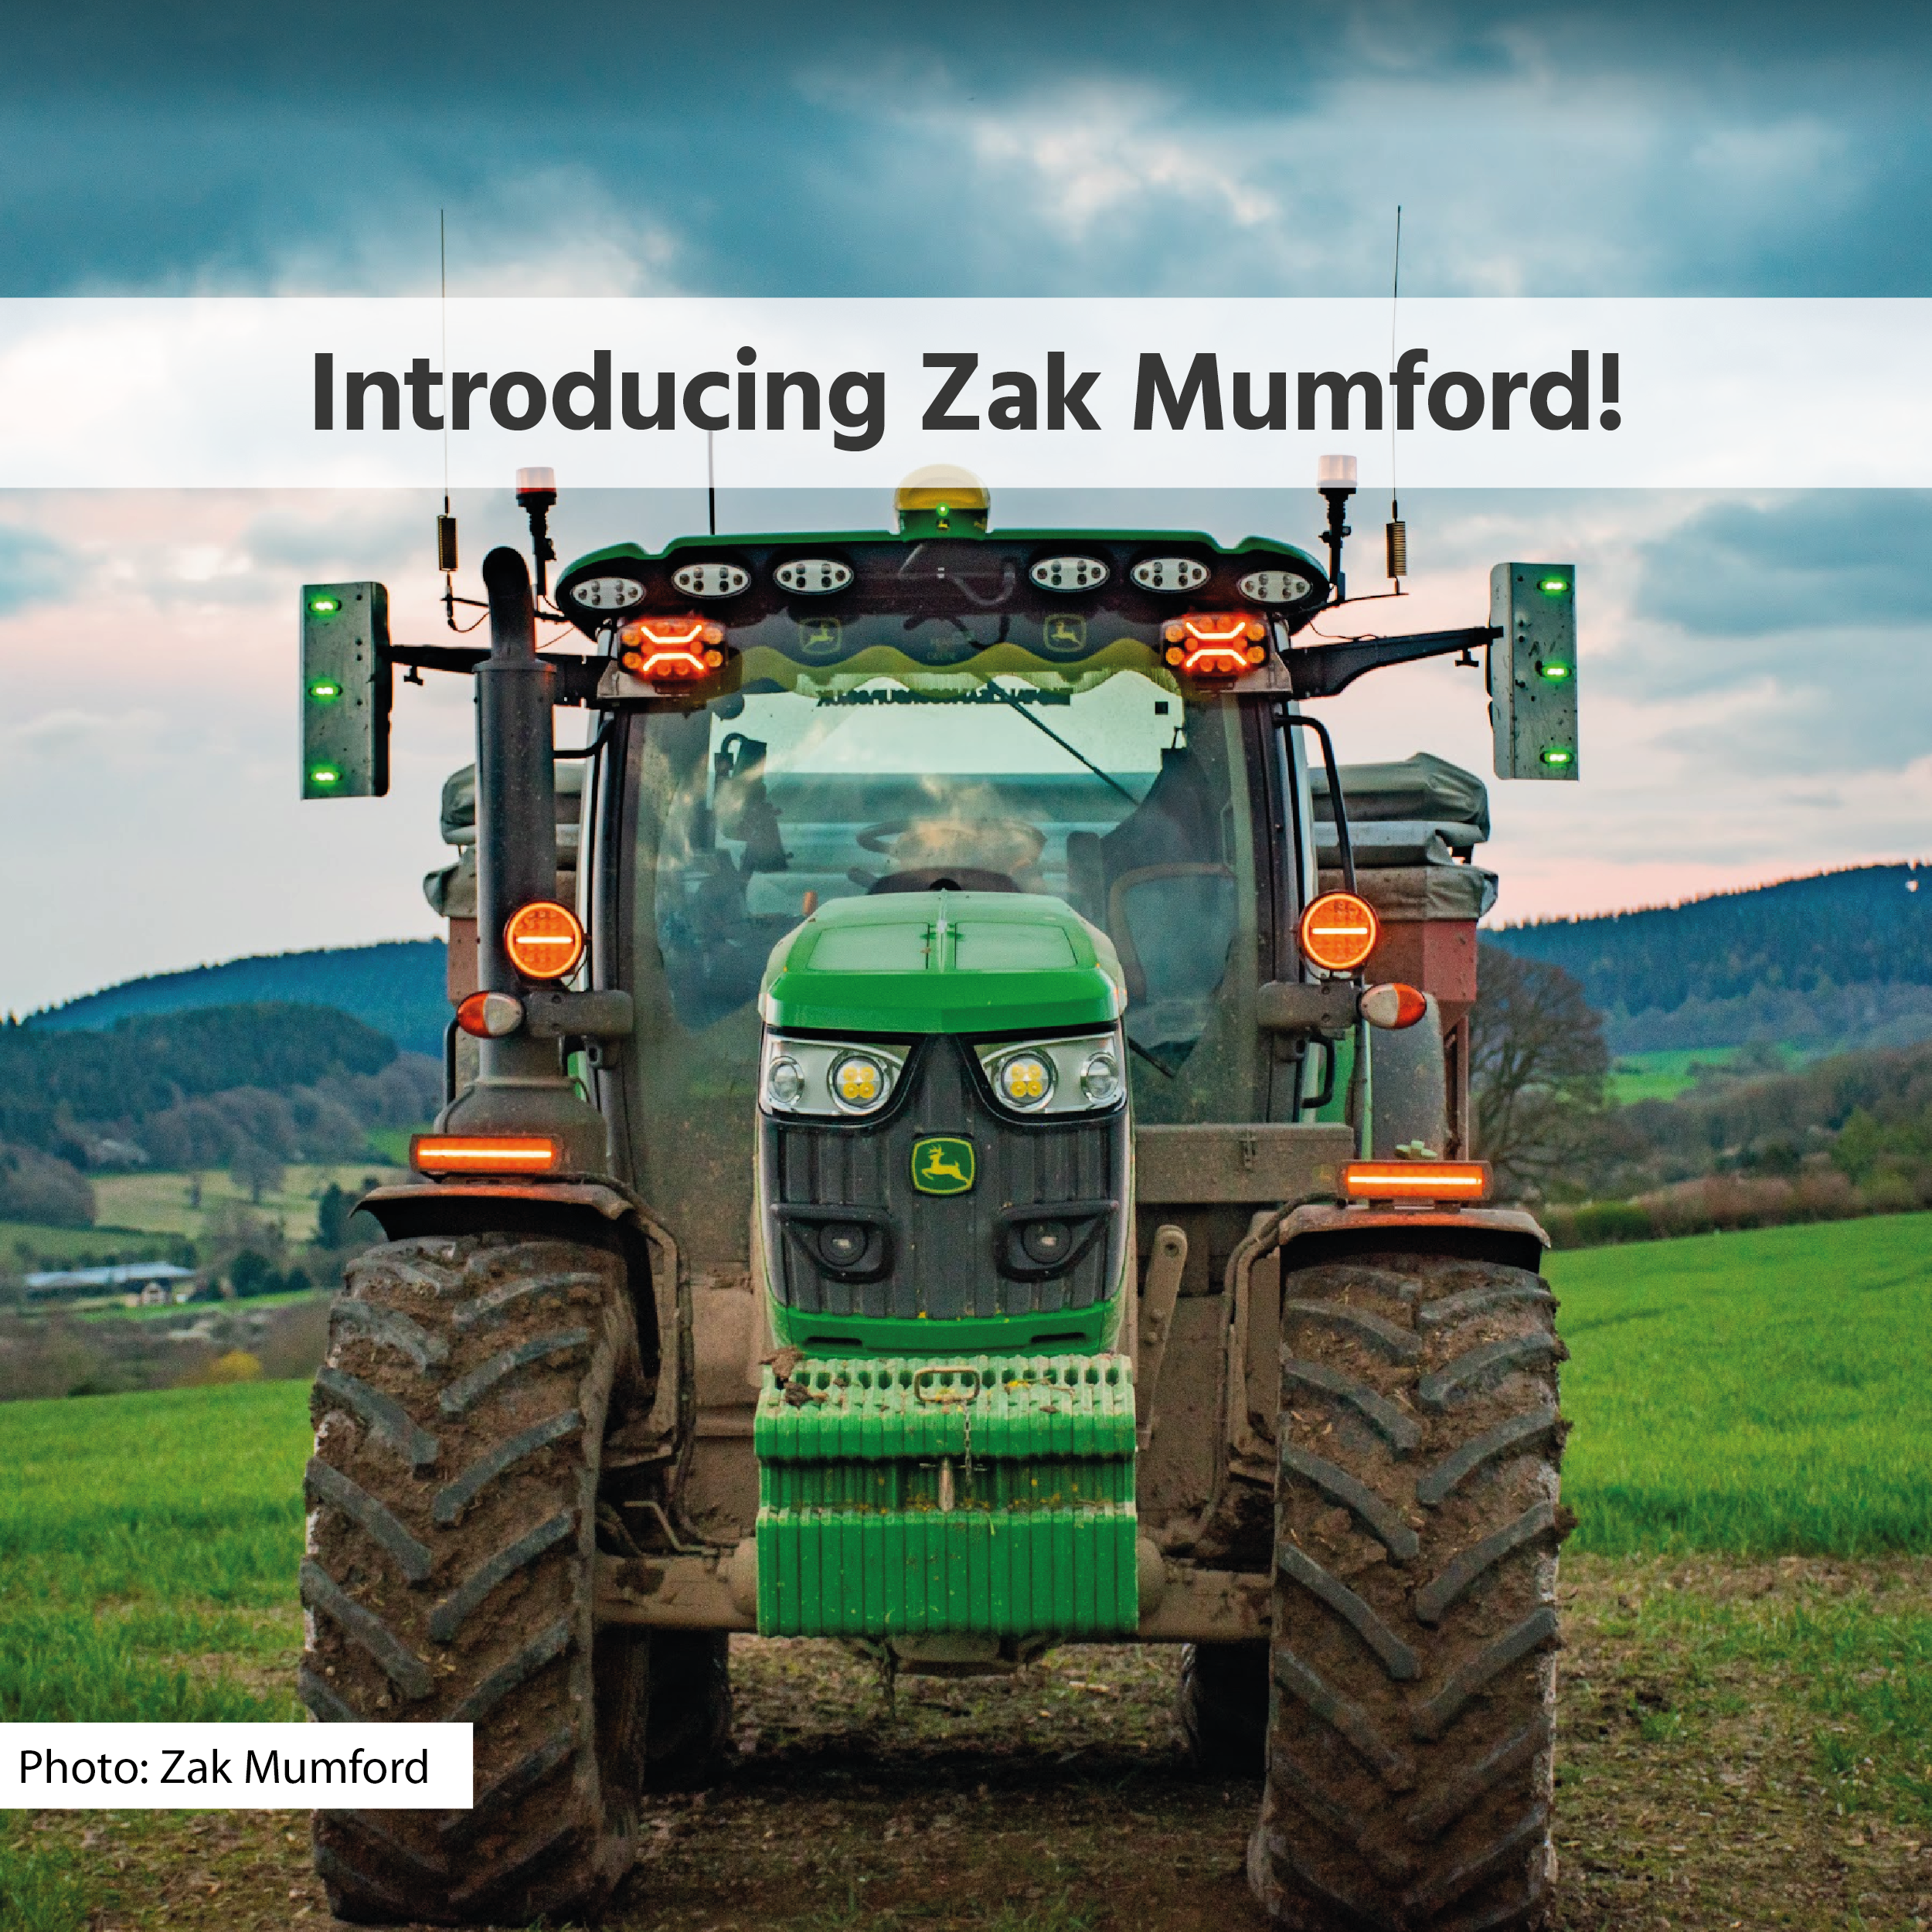 Introducing Zak Mumford!